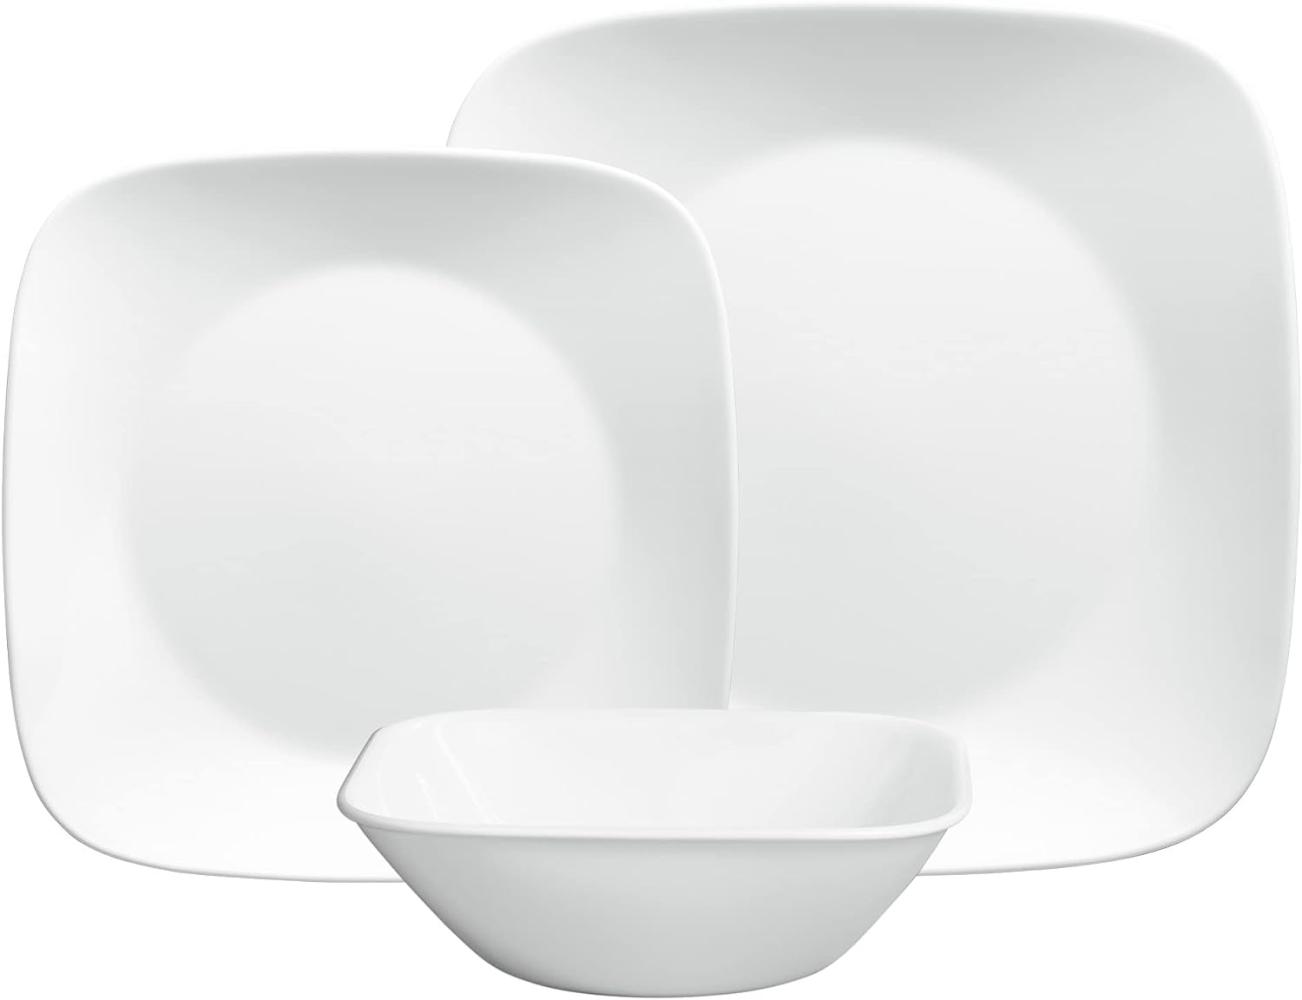 Corelle Glas Geschirr Set weiß - elegantes & langlebiges Design, 12-teilig Bild 1